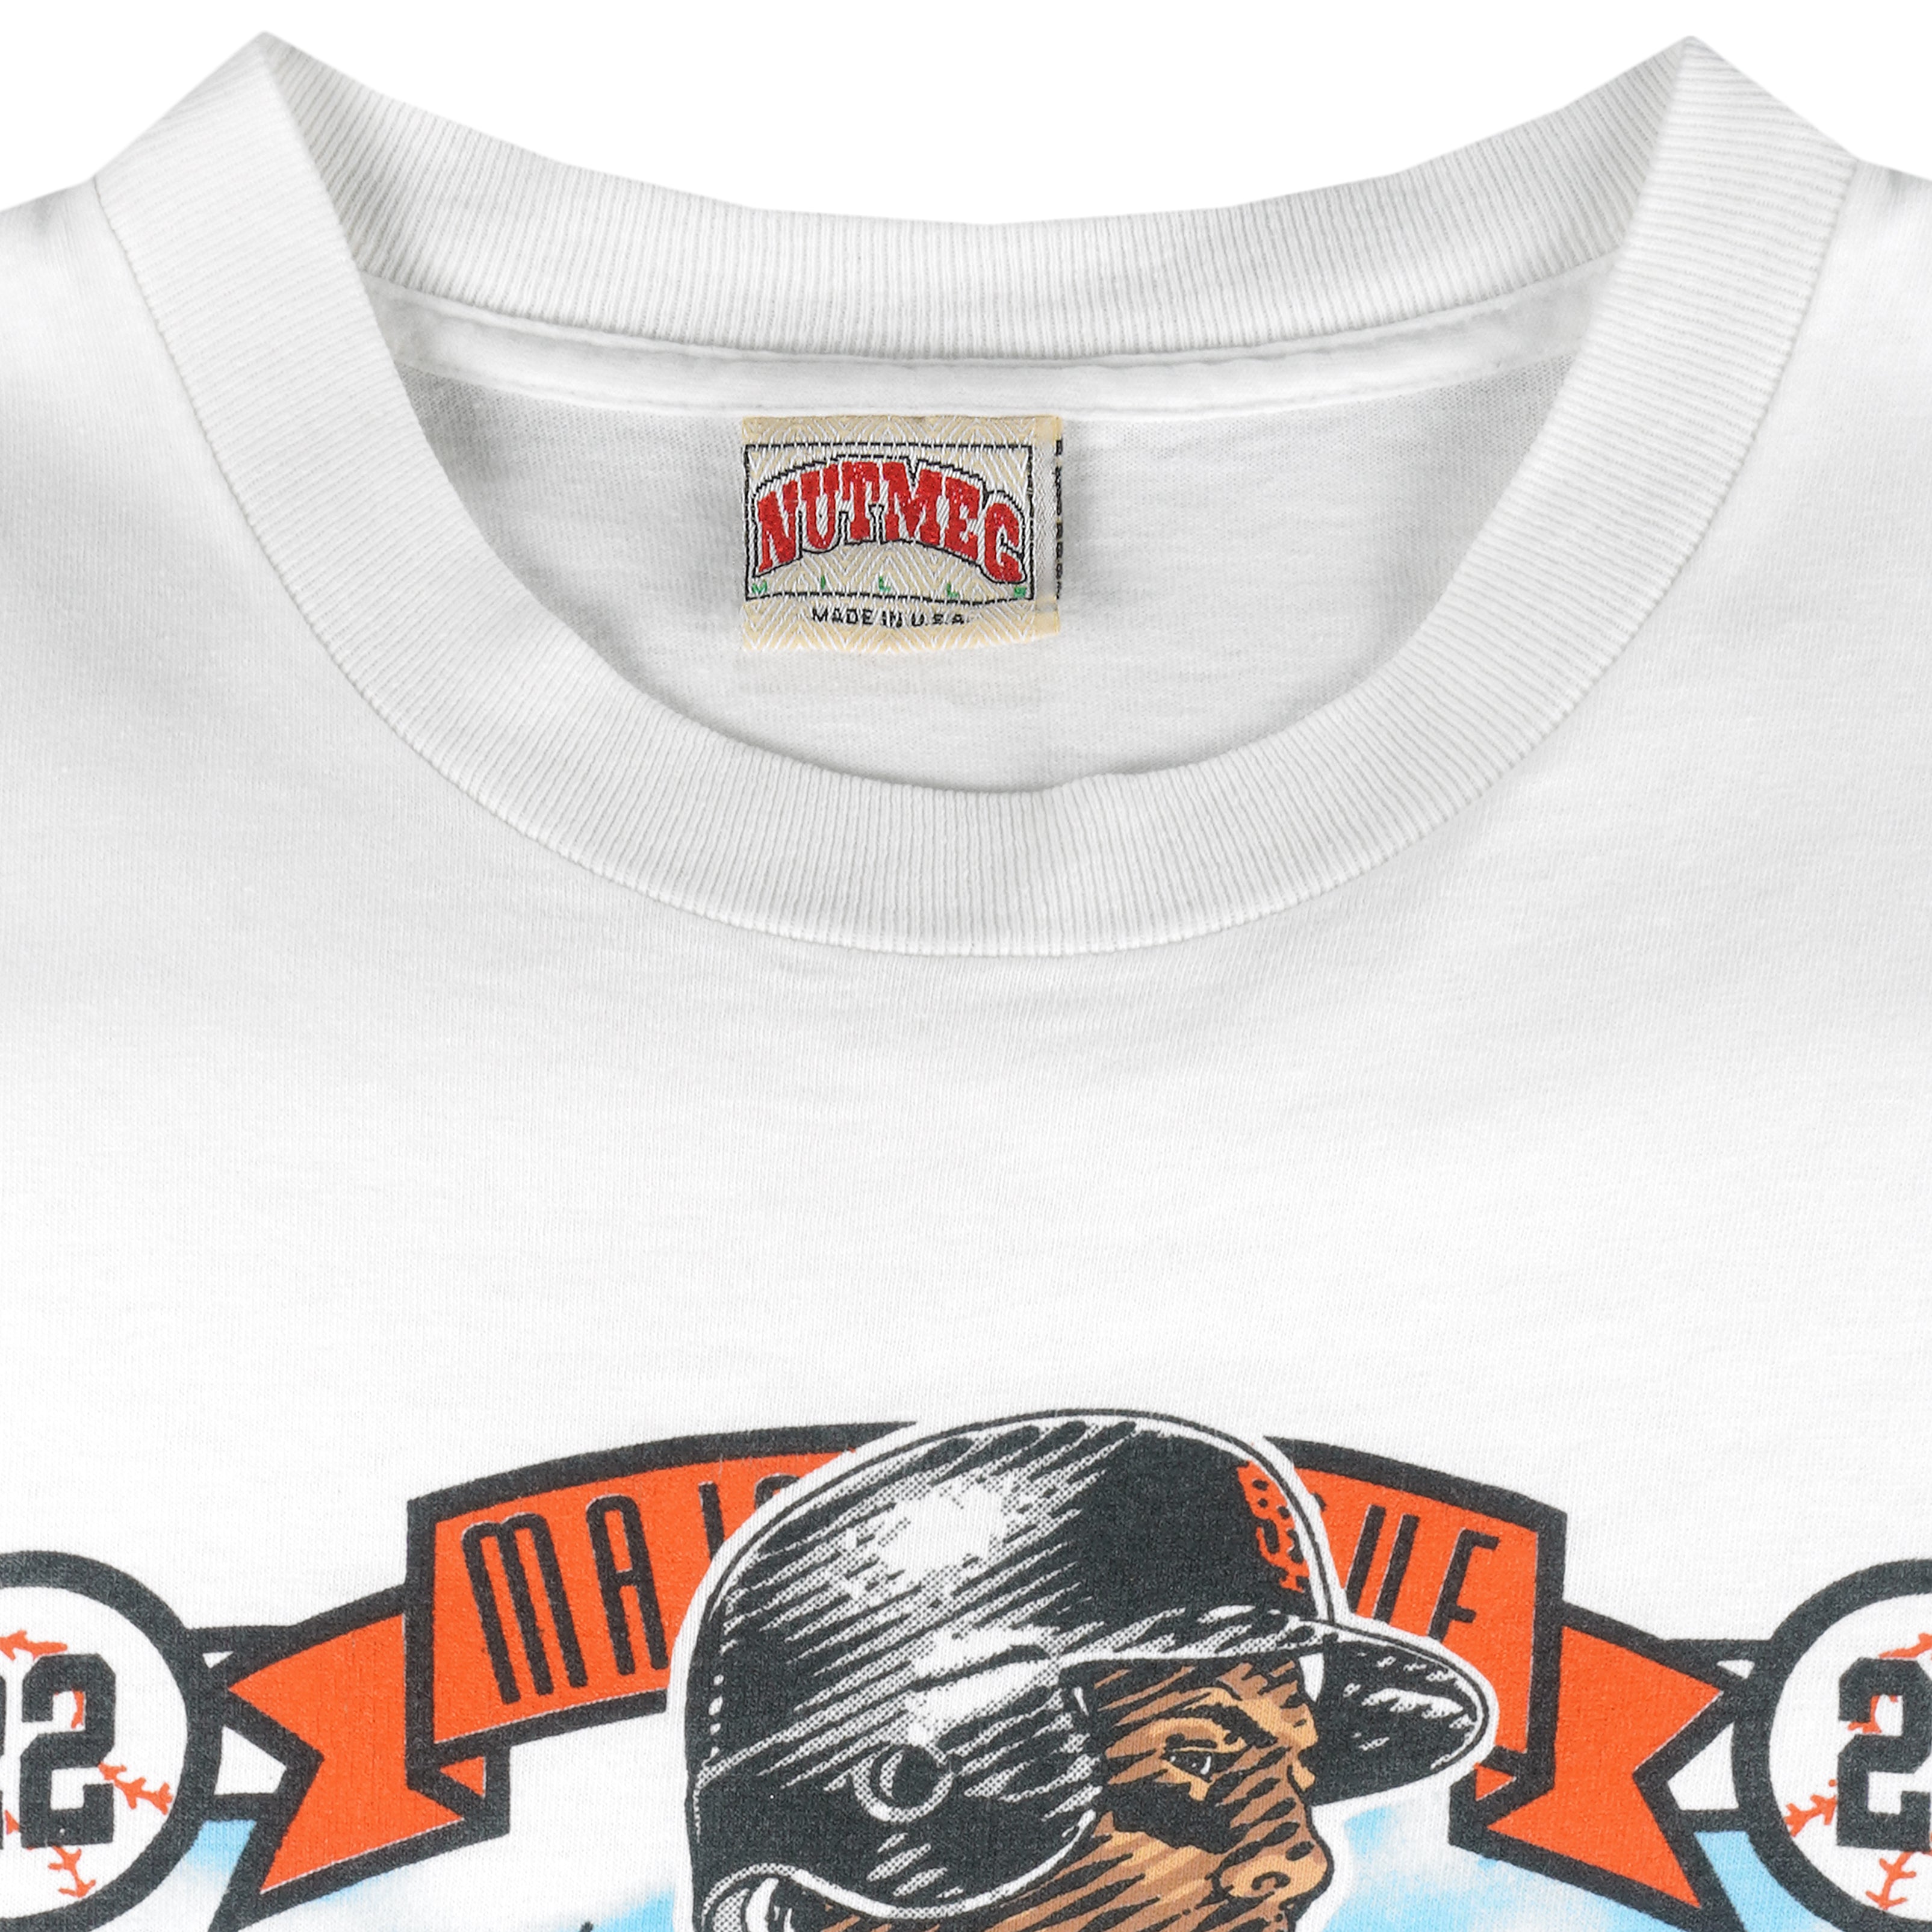 Vintage 1989 San Francisco Giants World Series MLB T-Shirt full size